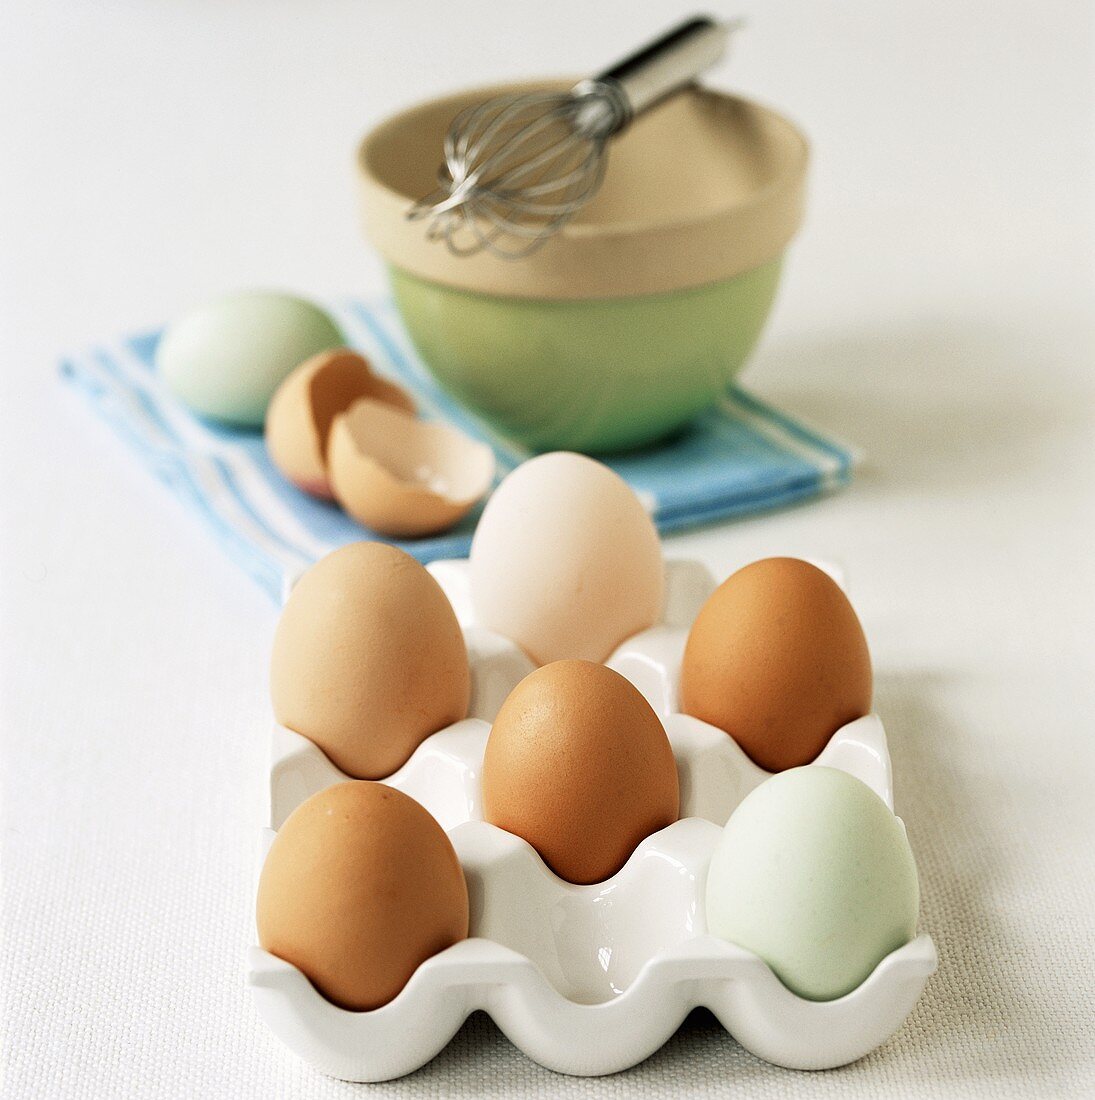 Eggs (brown, white and blue-green) in egg holder